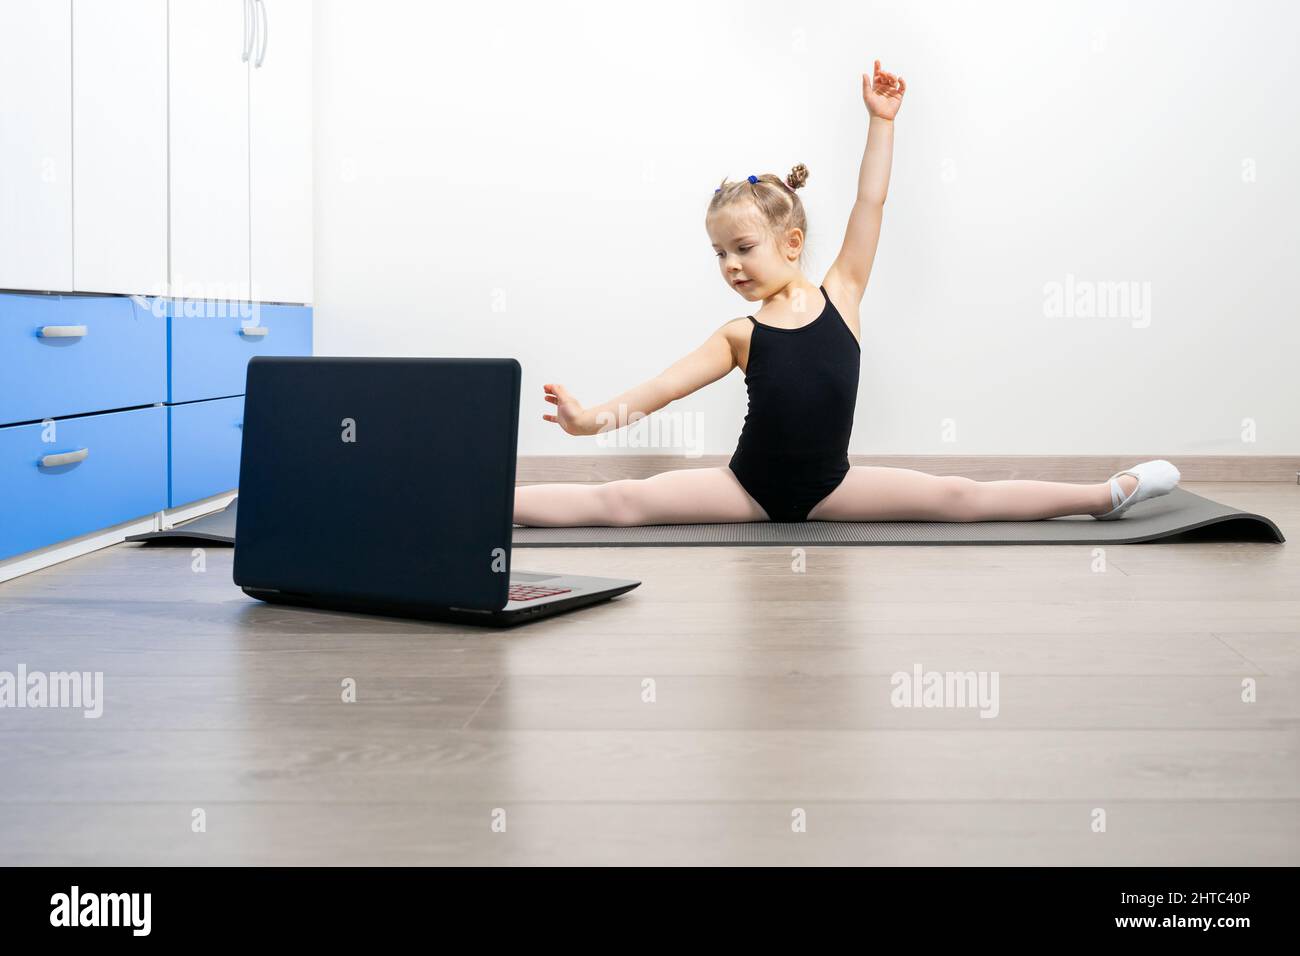 ginnastica ritmica online. preschooler ragazza che fa ginnastica ritmica con un allenatore online Foto Stock